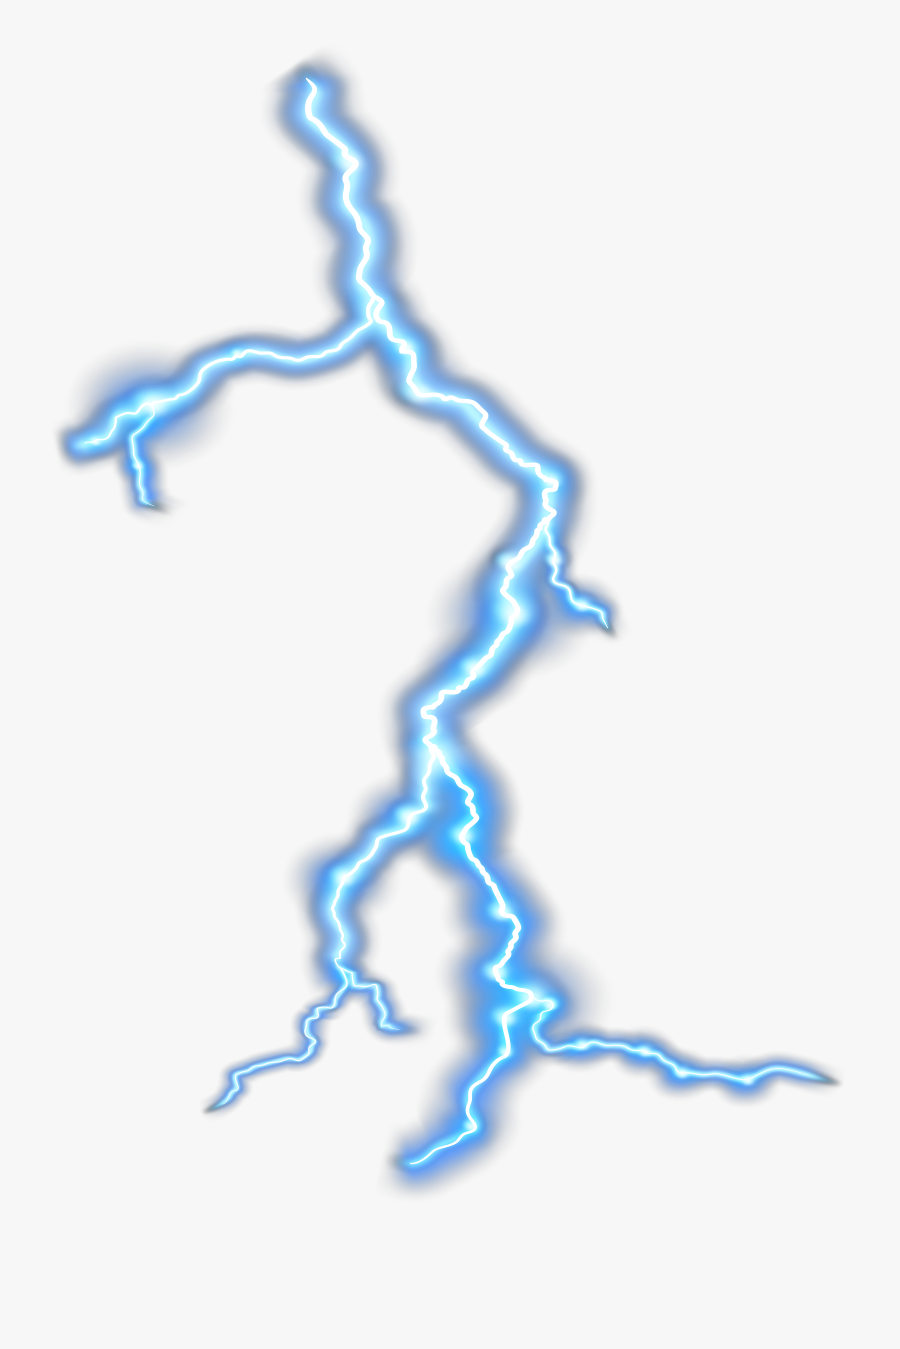 Thunderstorm Clipart Thunderbolt - Blue Thunder Png, Transparent Clipart